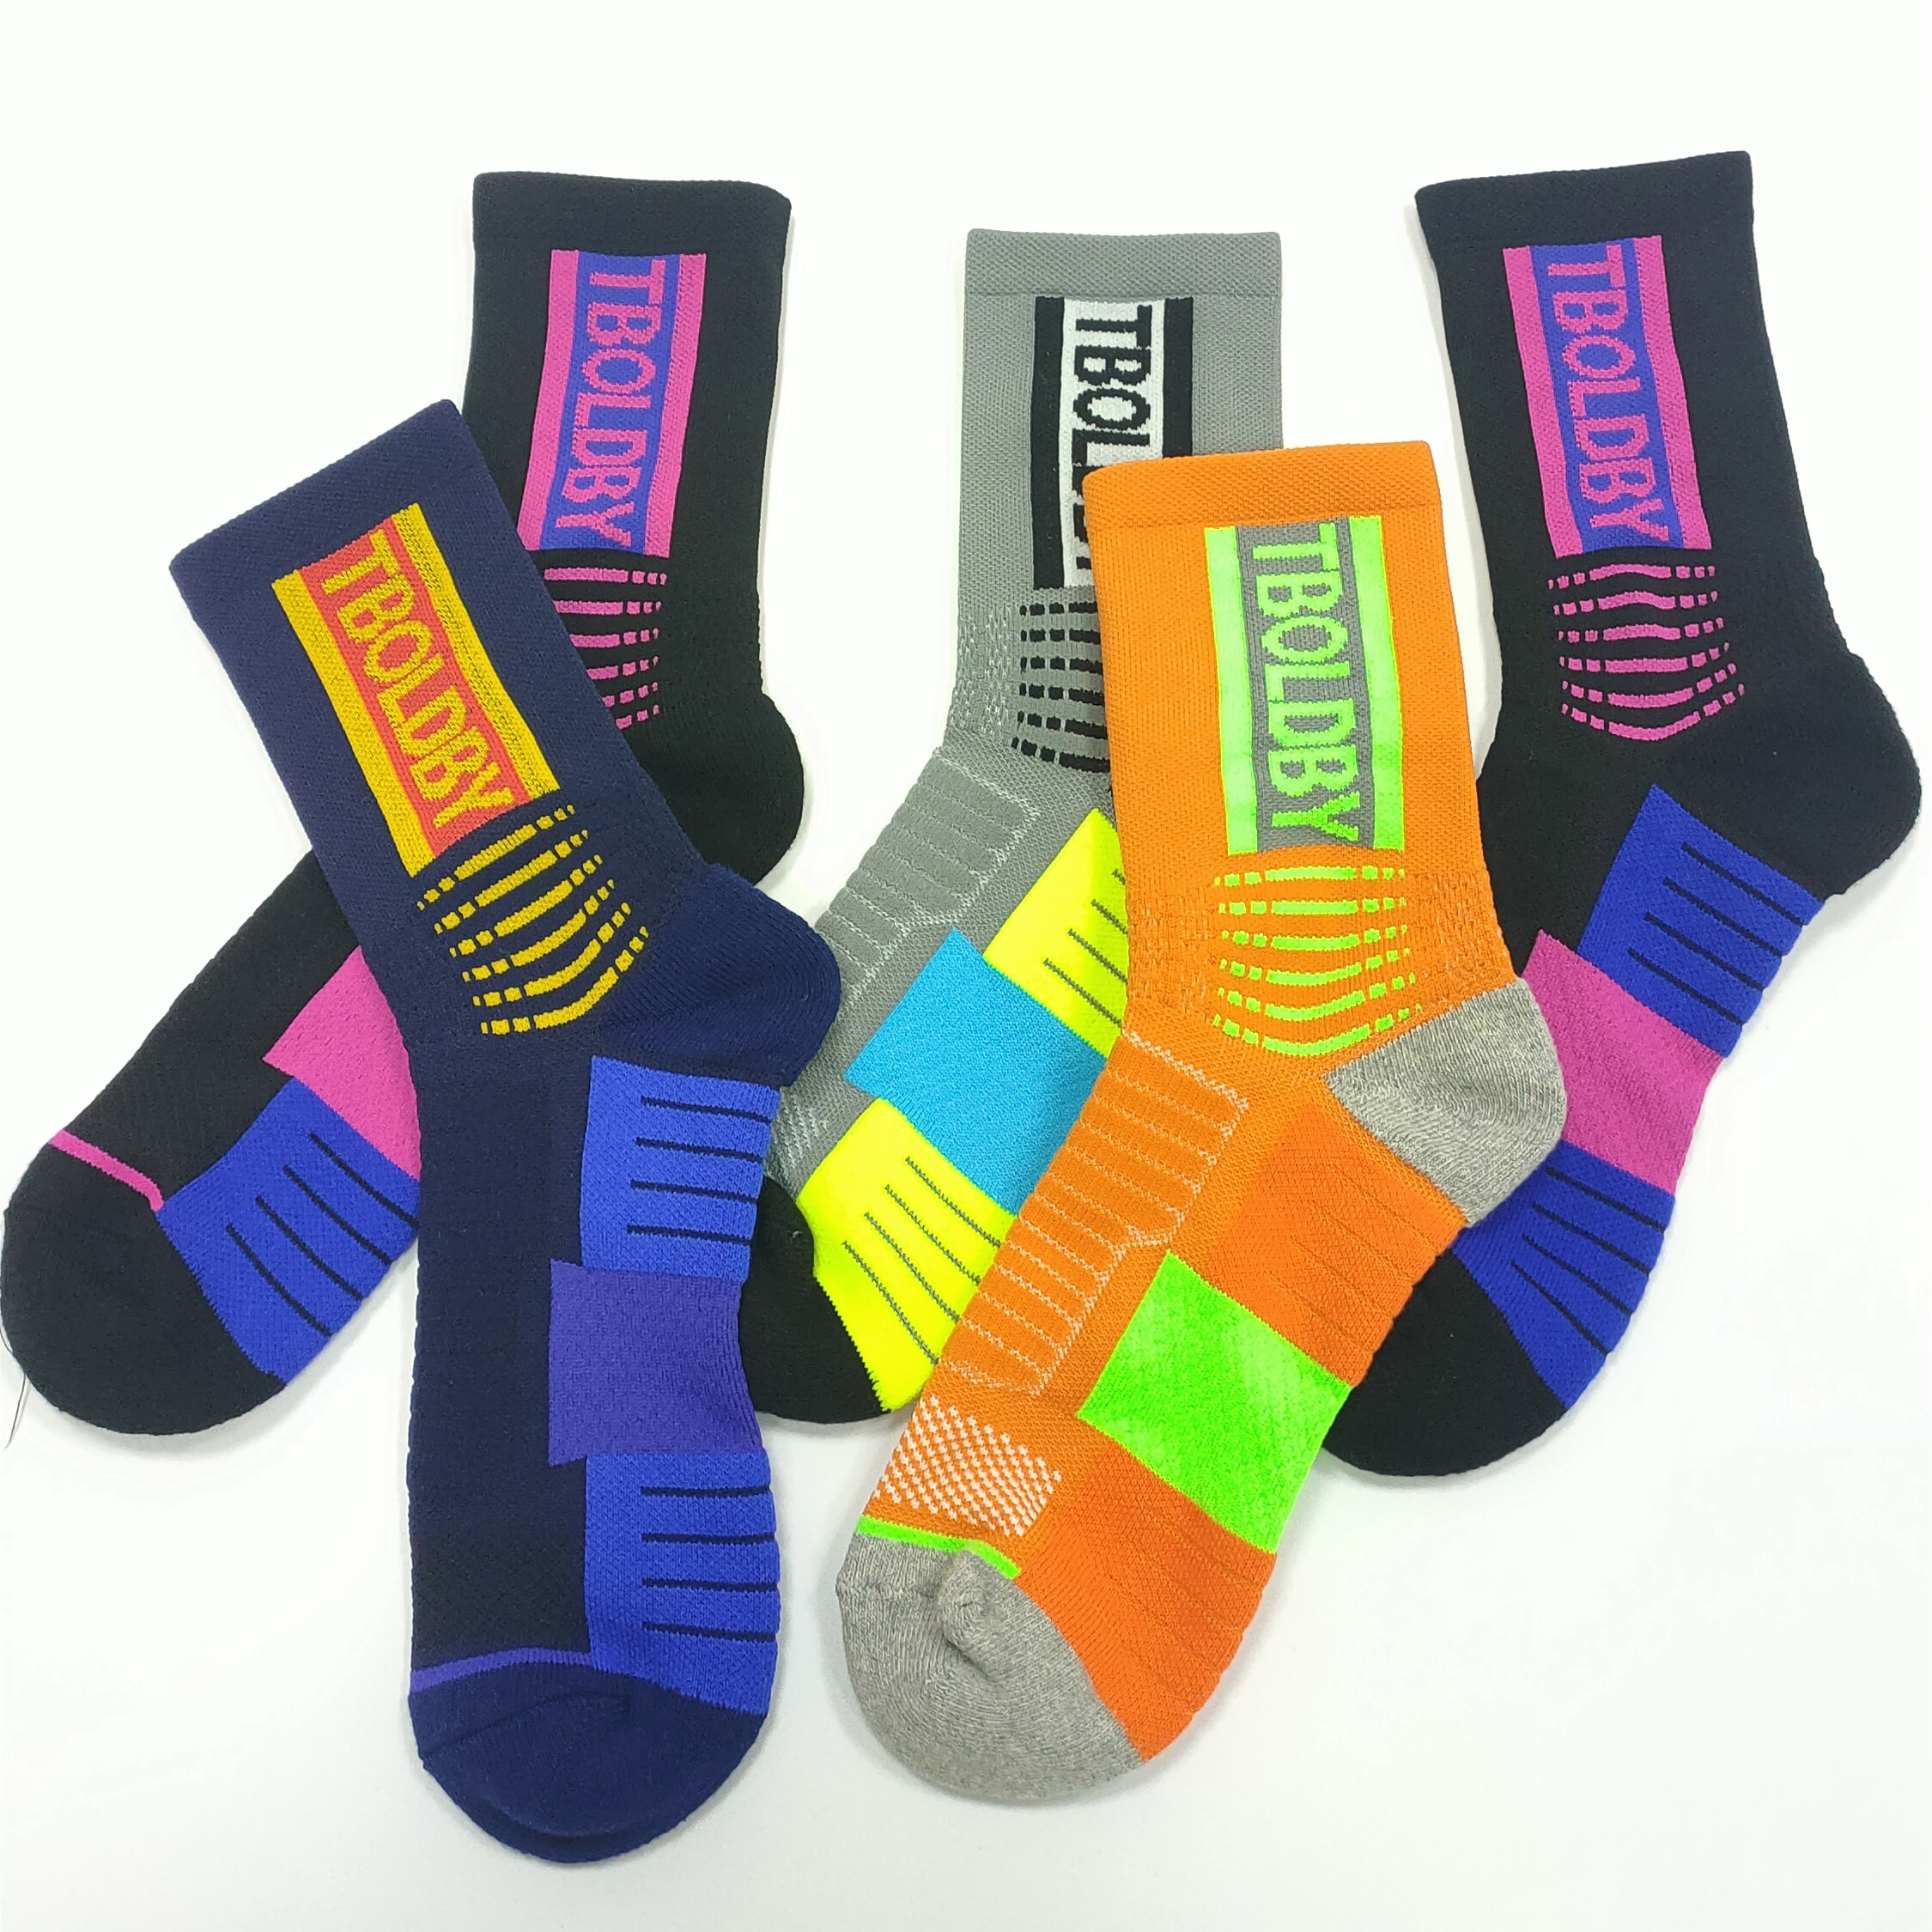 Make Different Styles of Socks